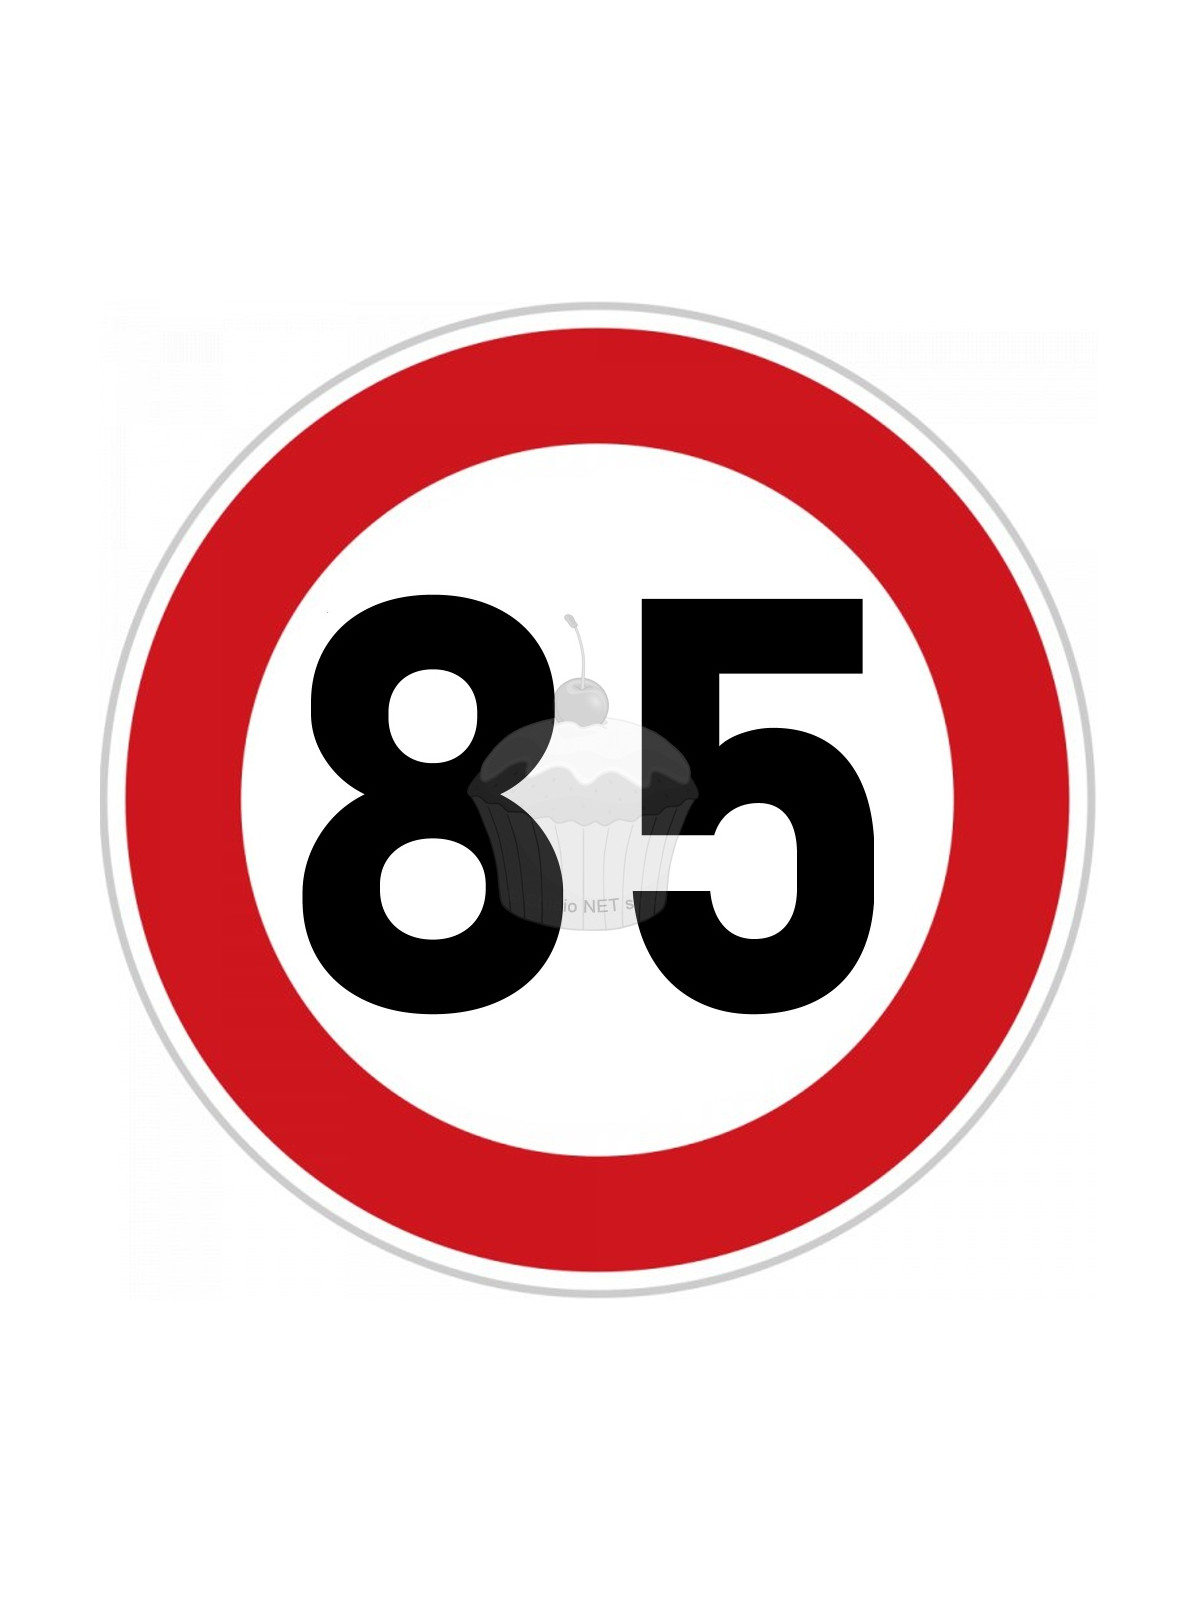 Edible paper "85th Birthday" ban sign A4